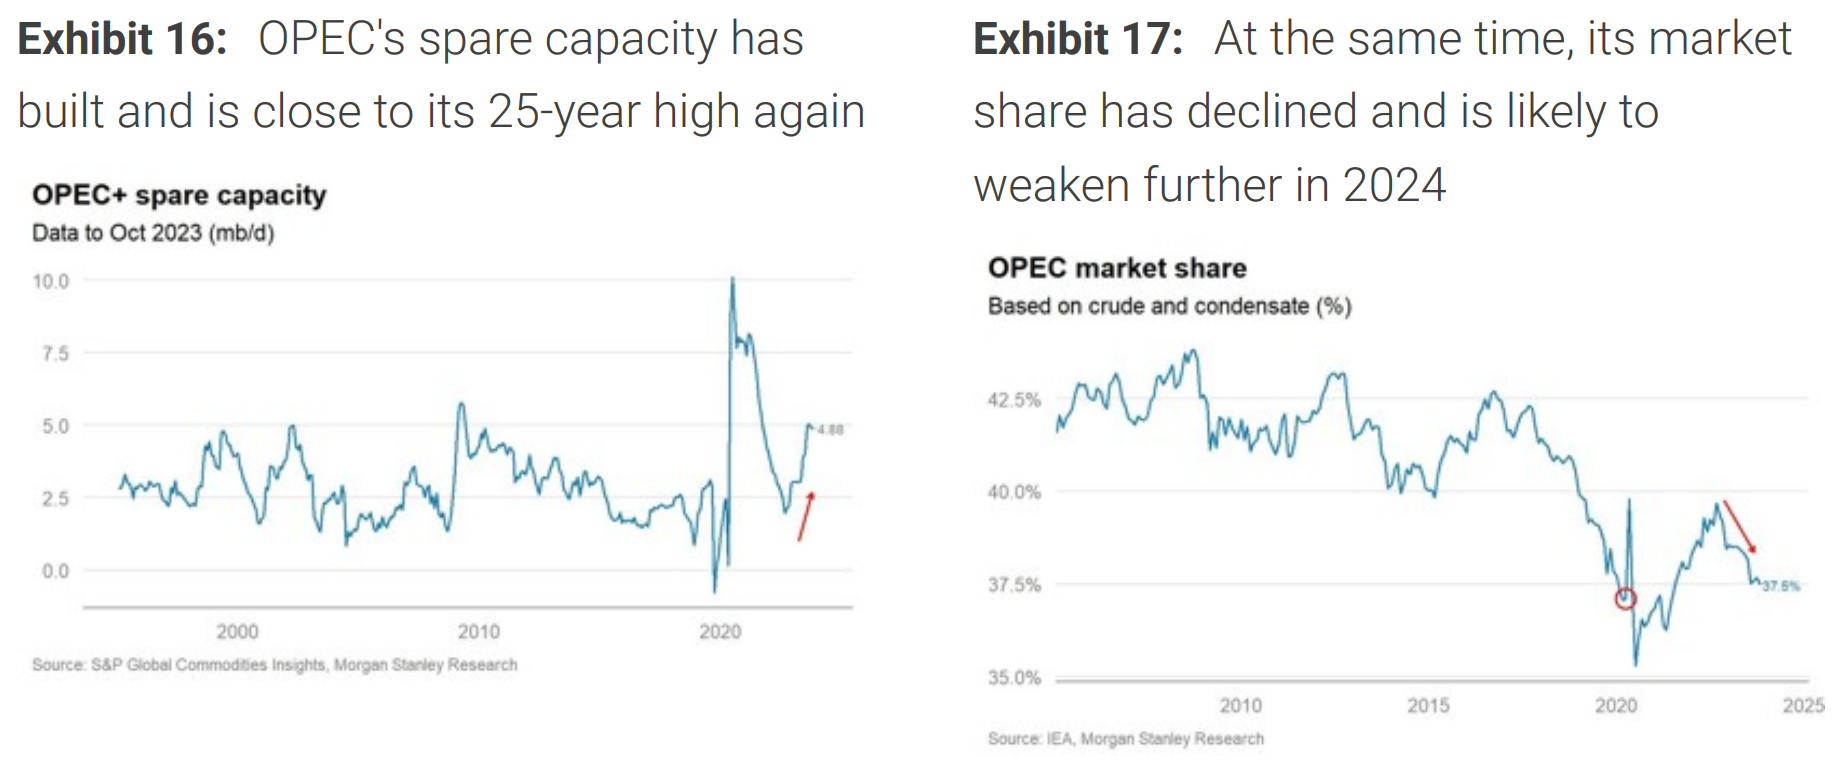 OPEC Spare capacity and market share